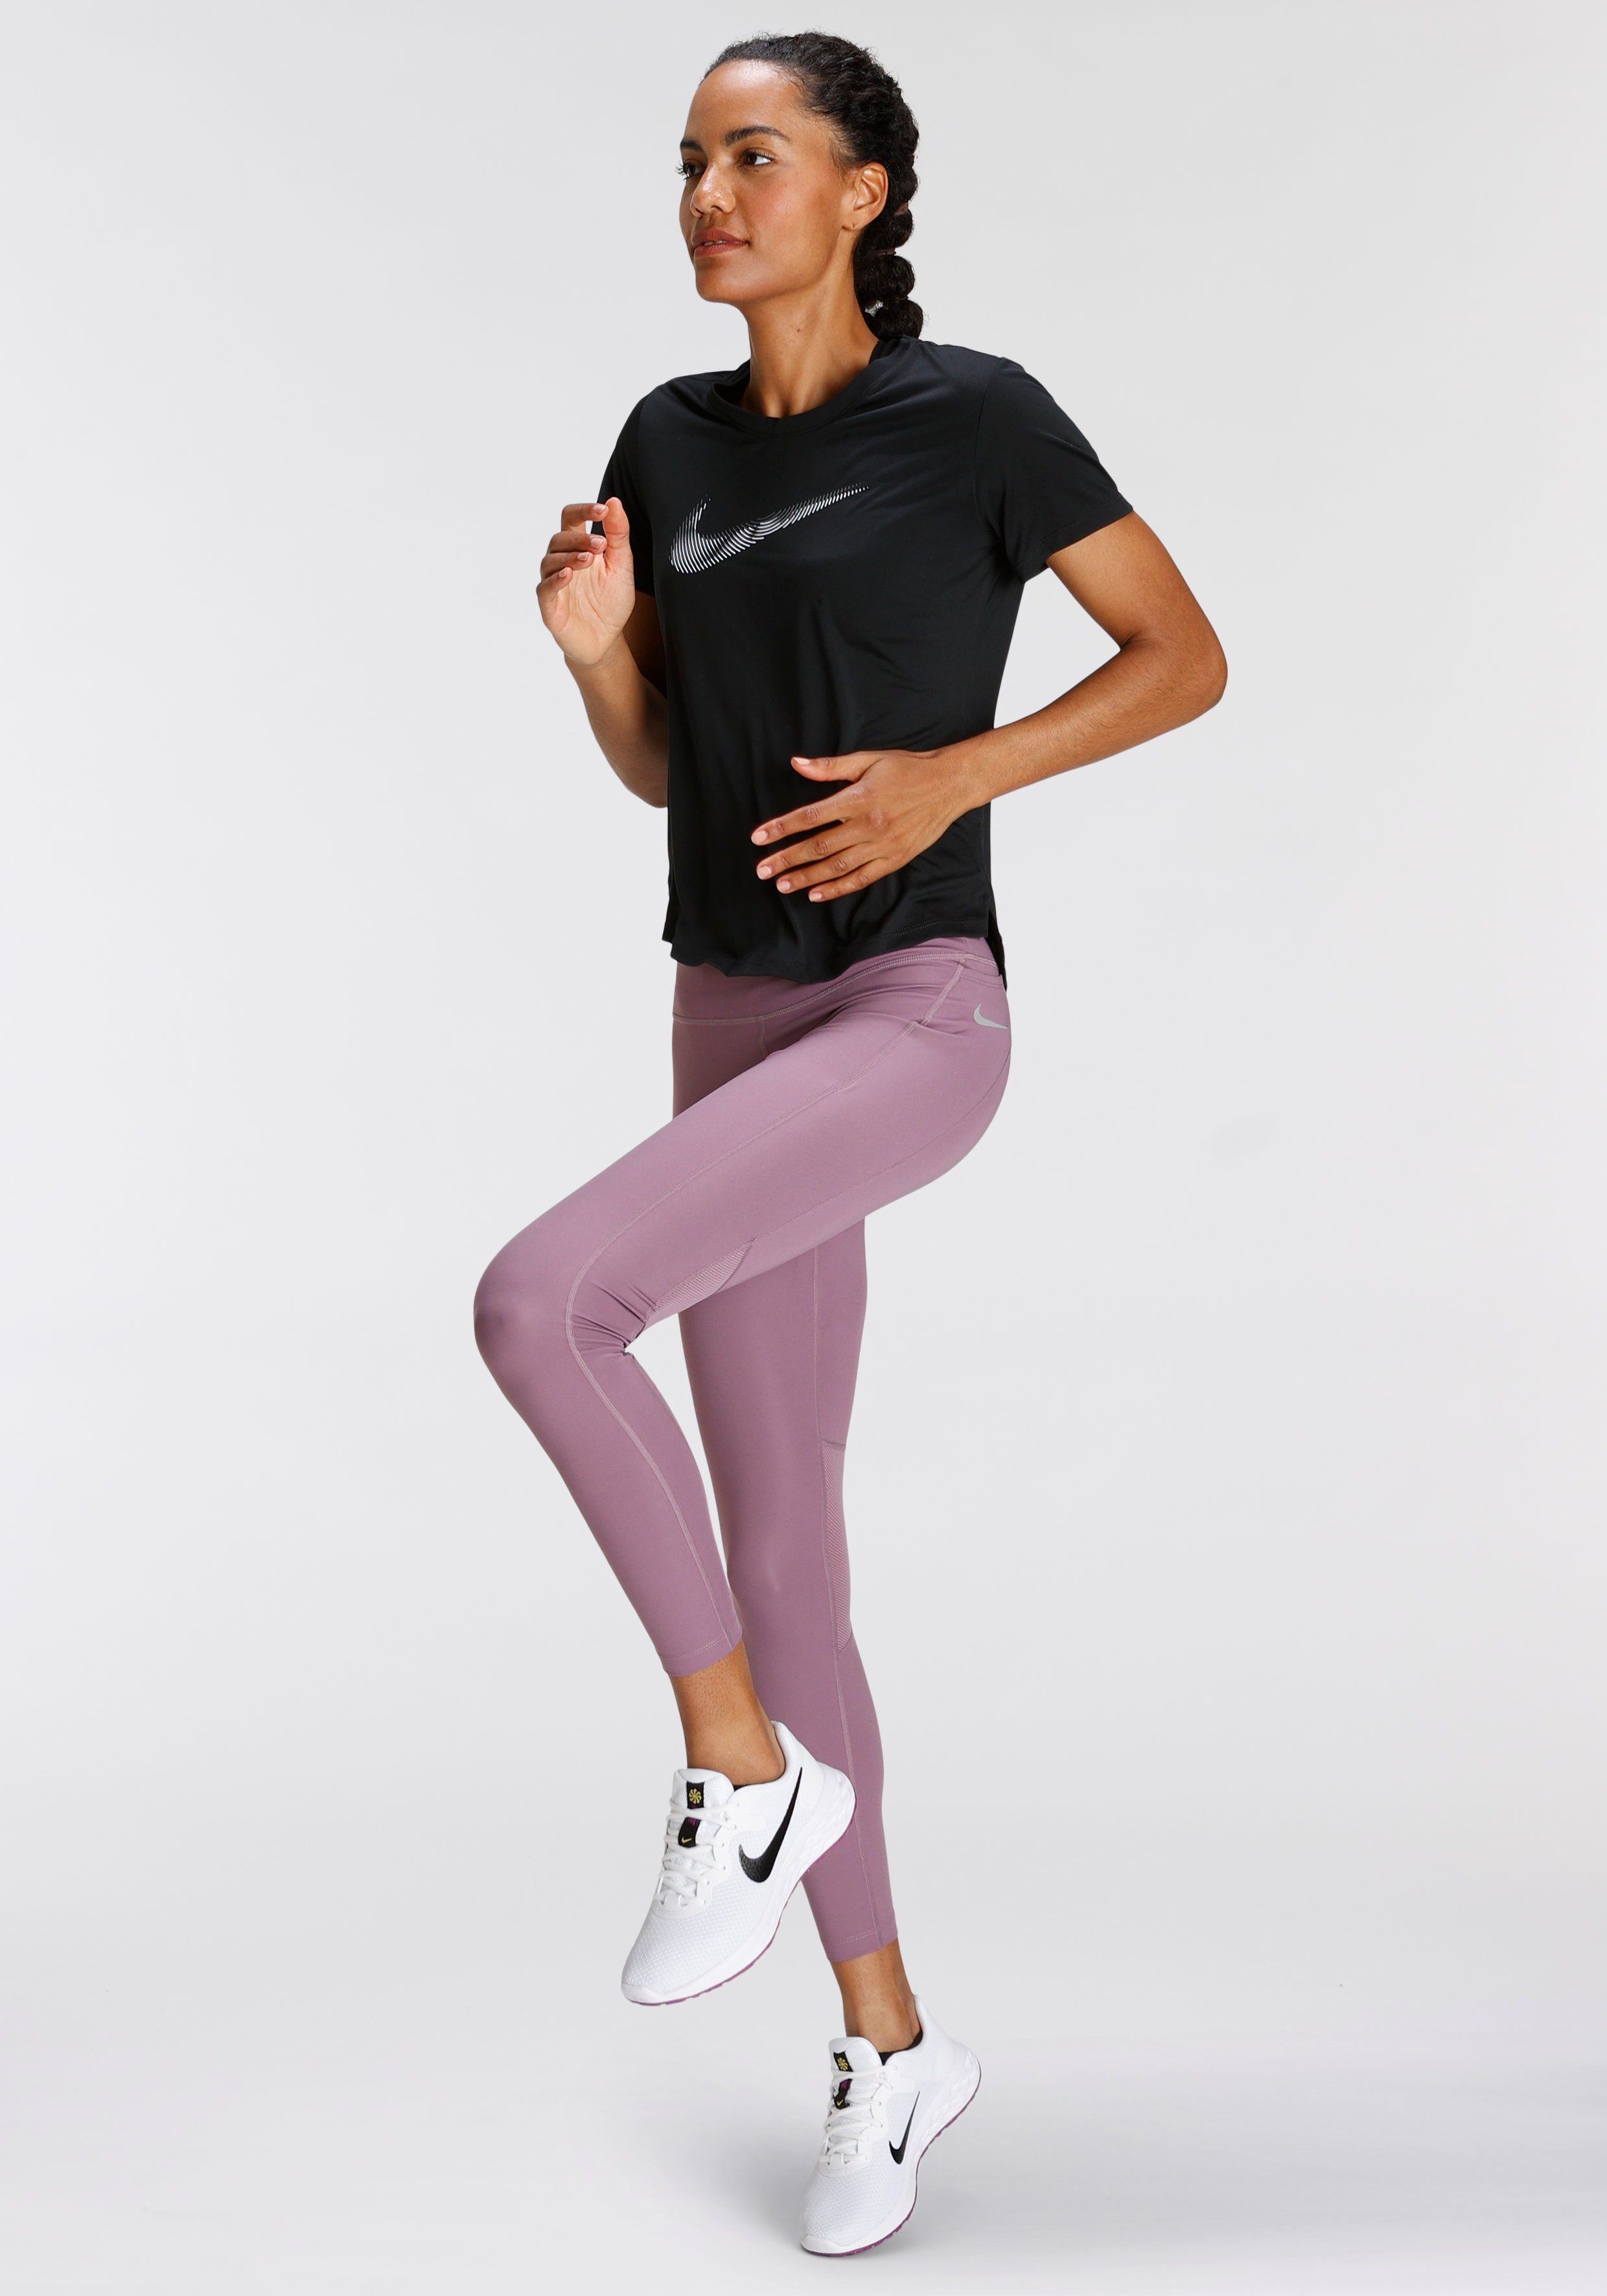 TOP DRI-FIT Nike SWOOSH RUNNING BLACK/COOL Laufshirt SHORT-SLEEVE GREY WOMEN'S